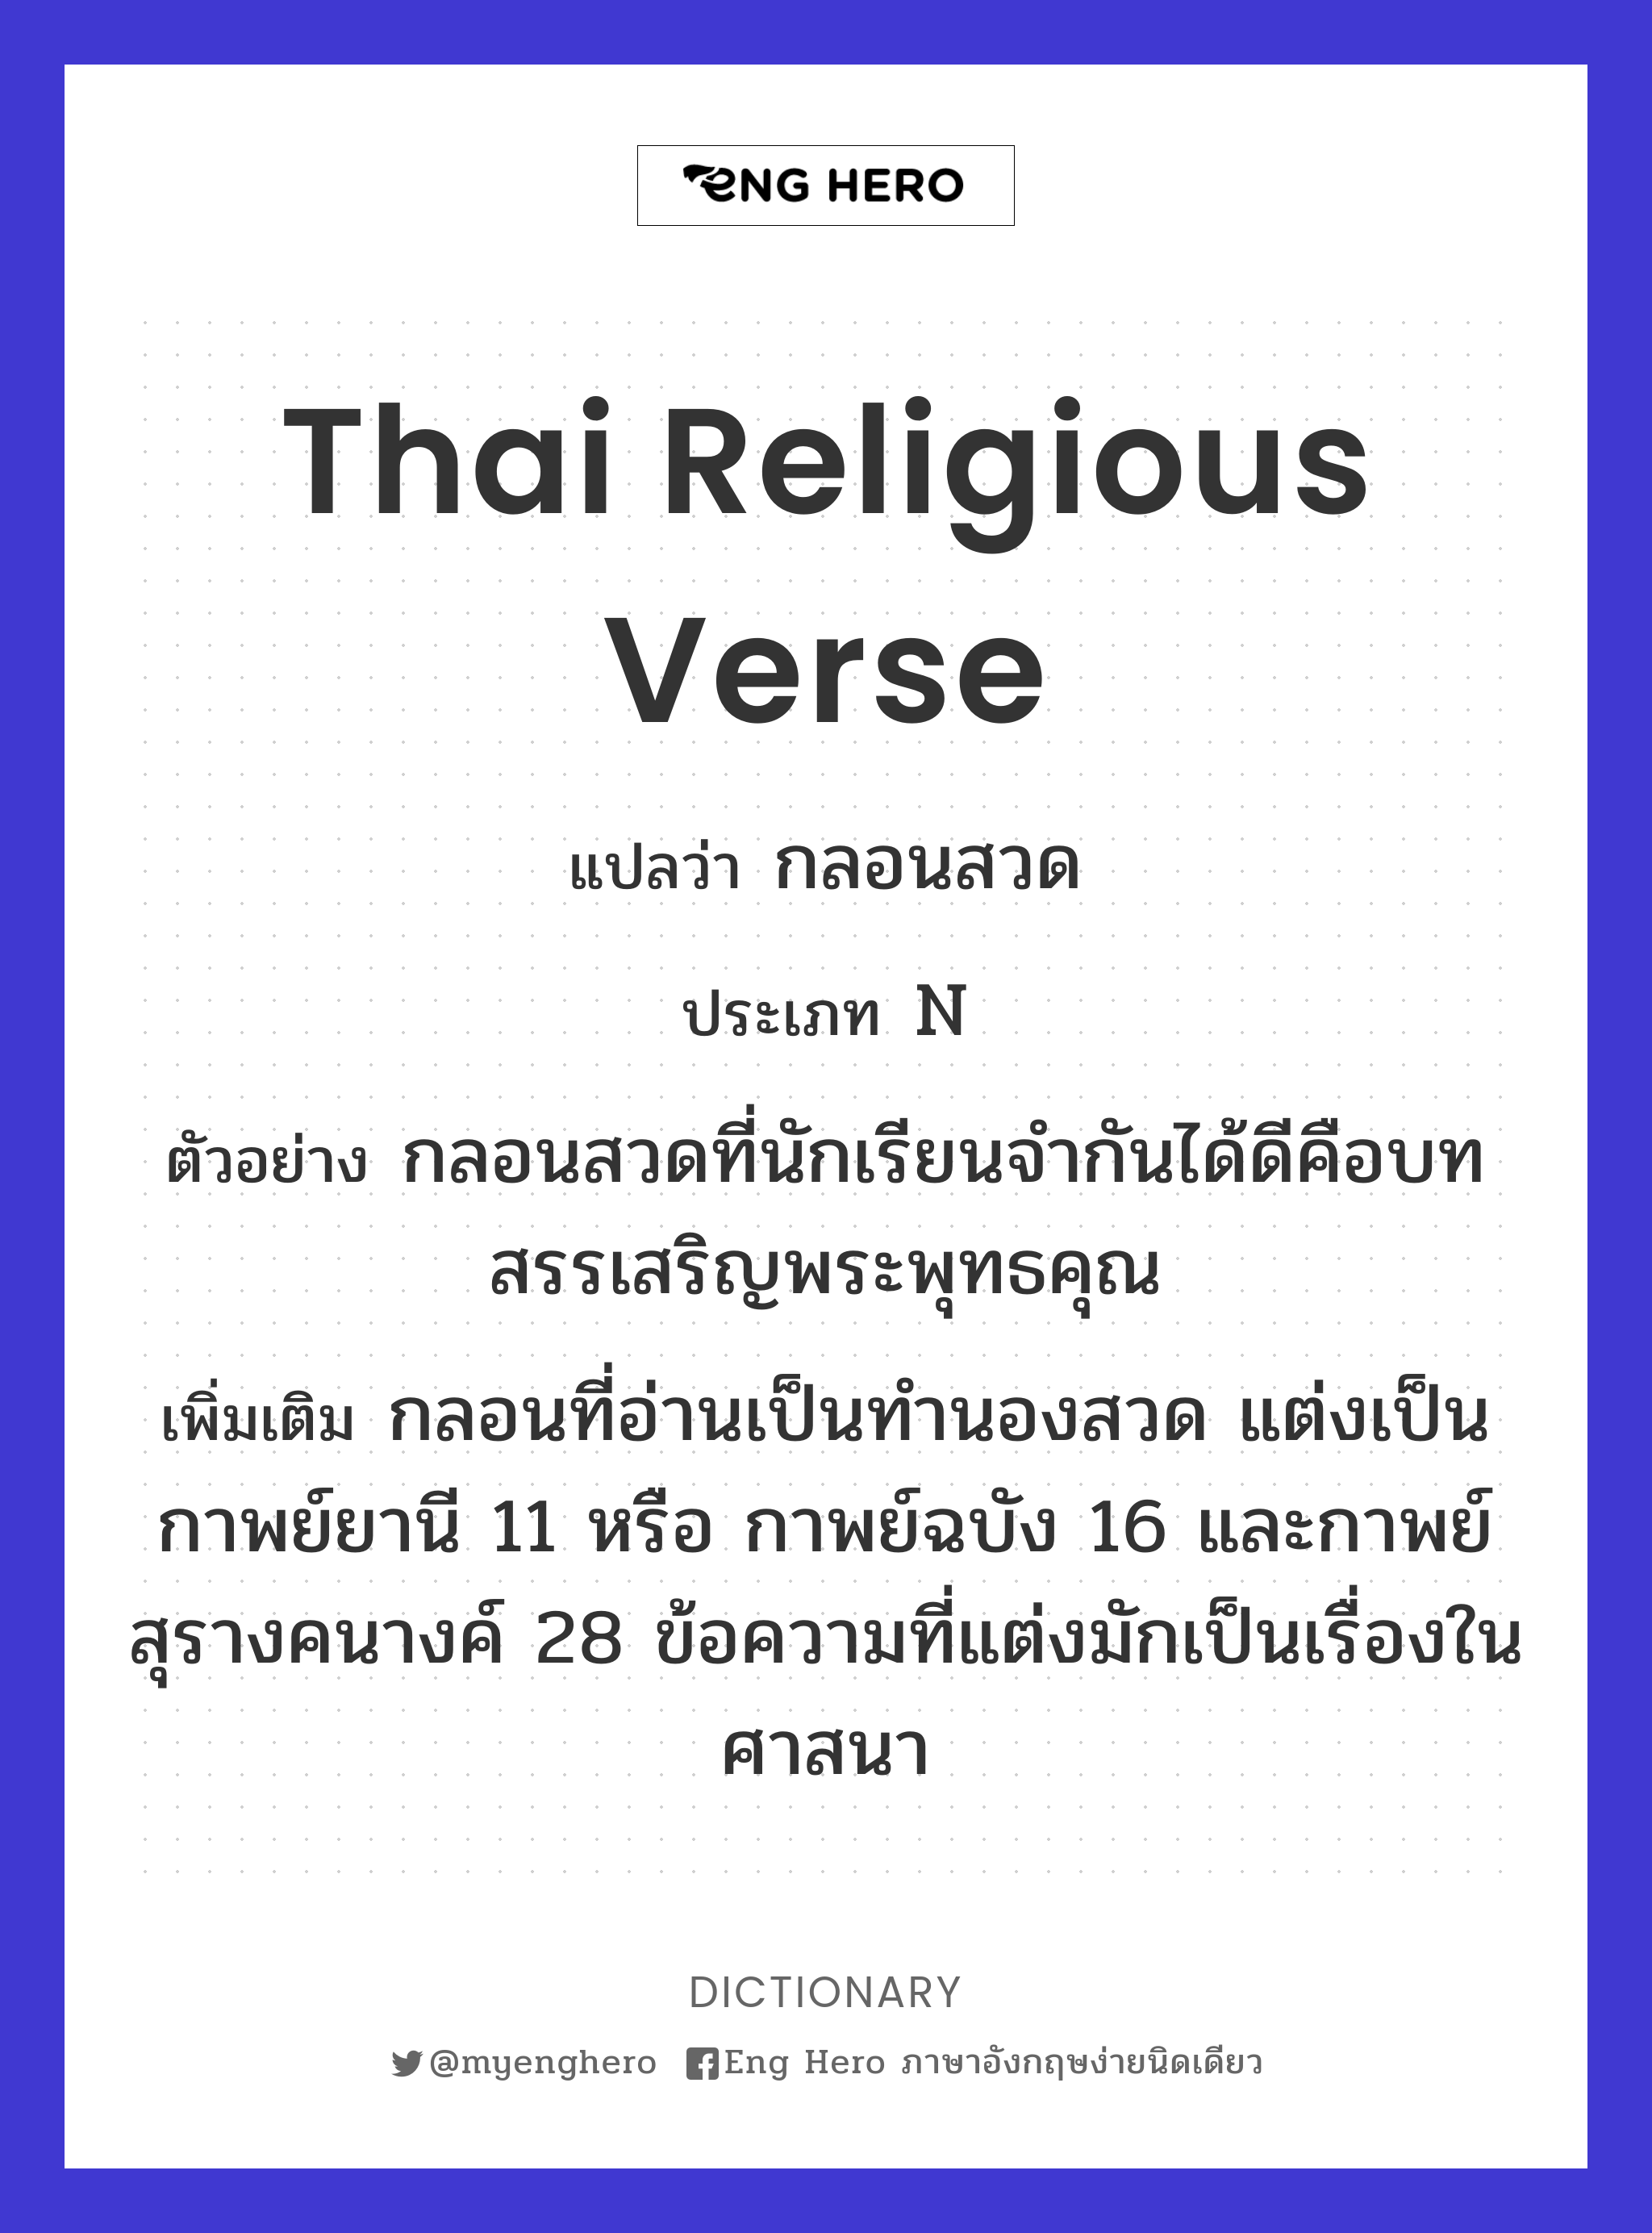 Thai religious verse